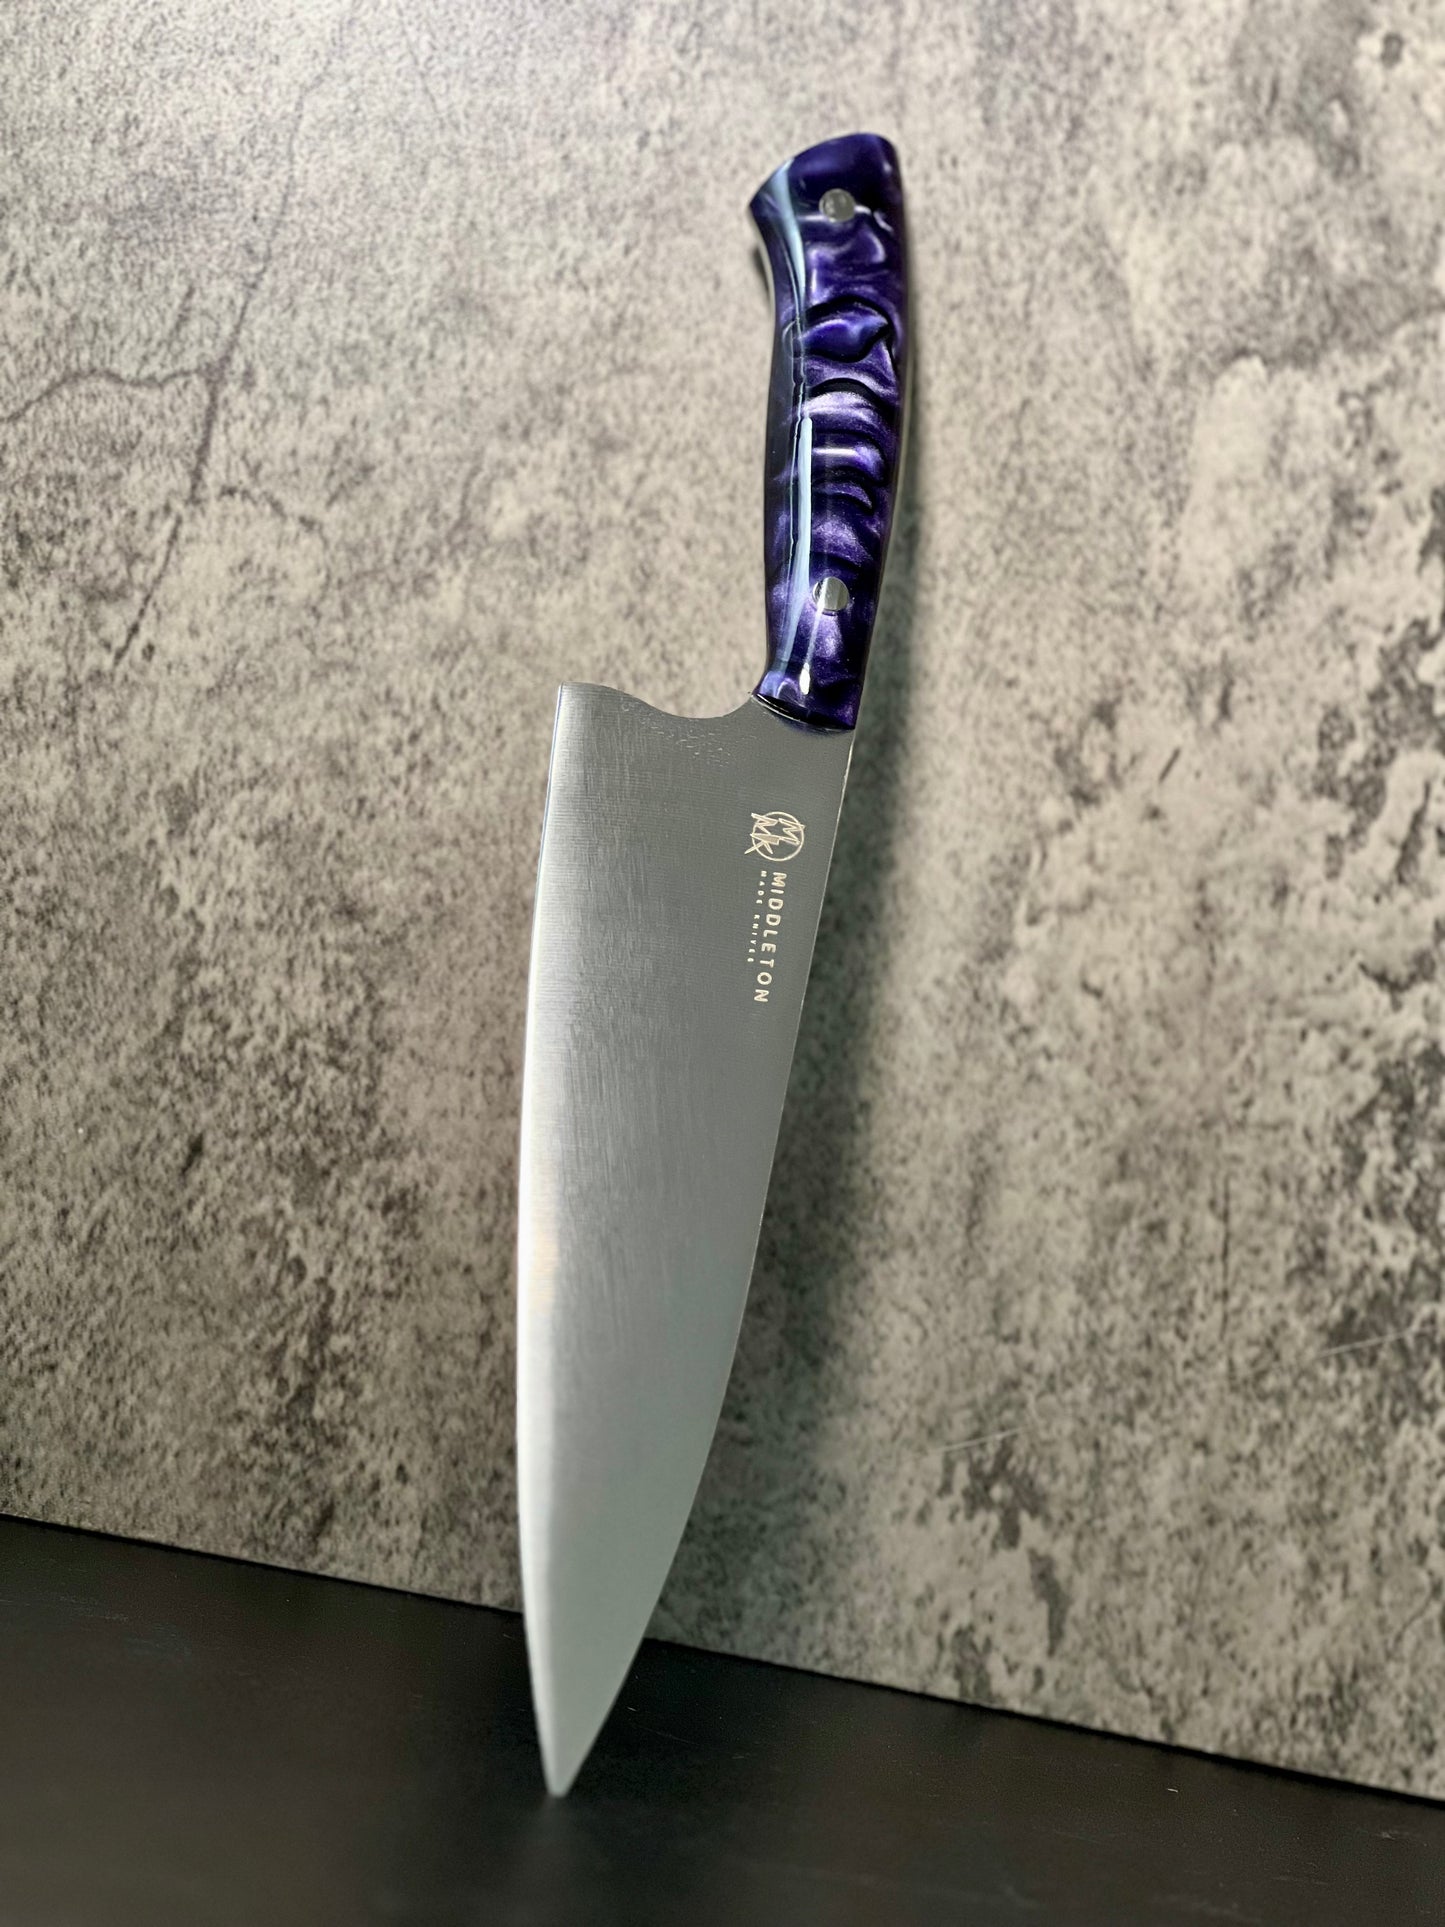 Emmy award winning Chef Justin Sutherland Collab 8” chef knife